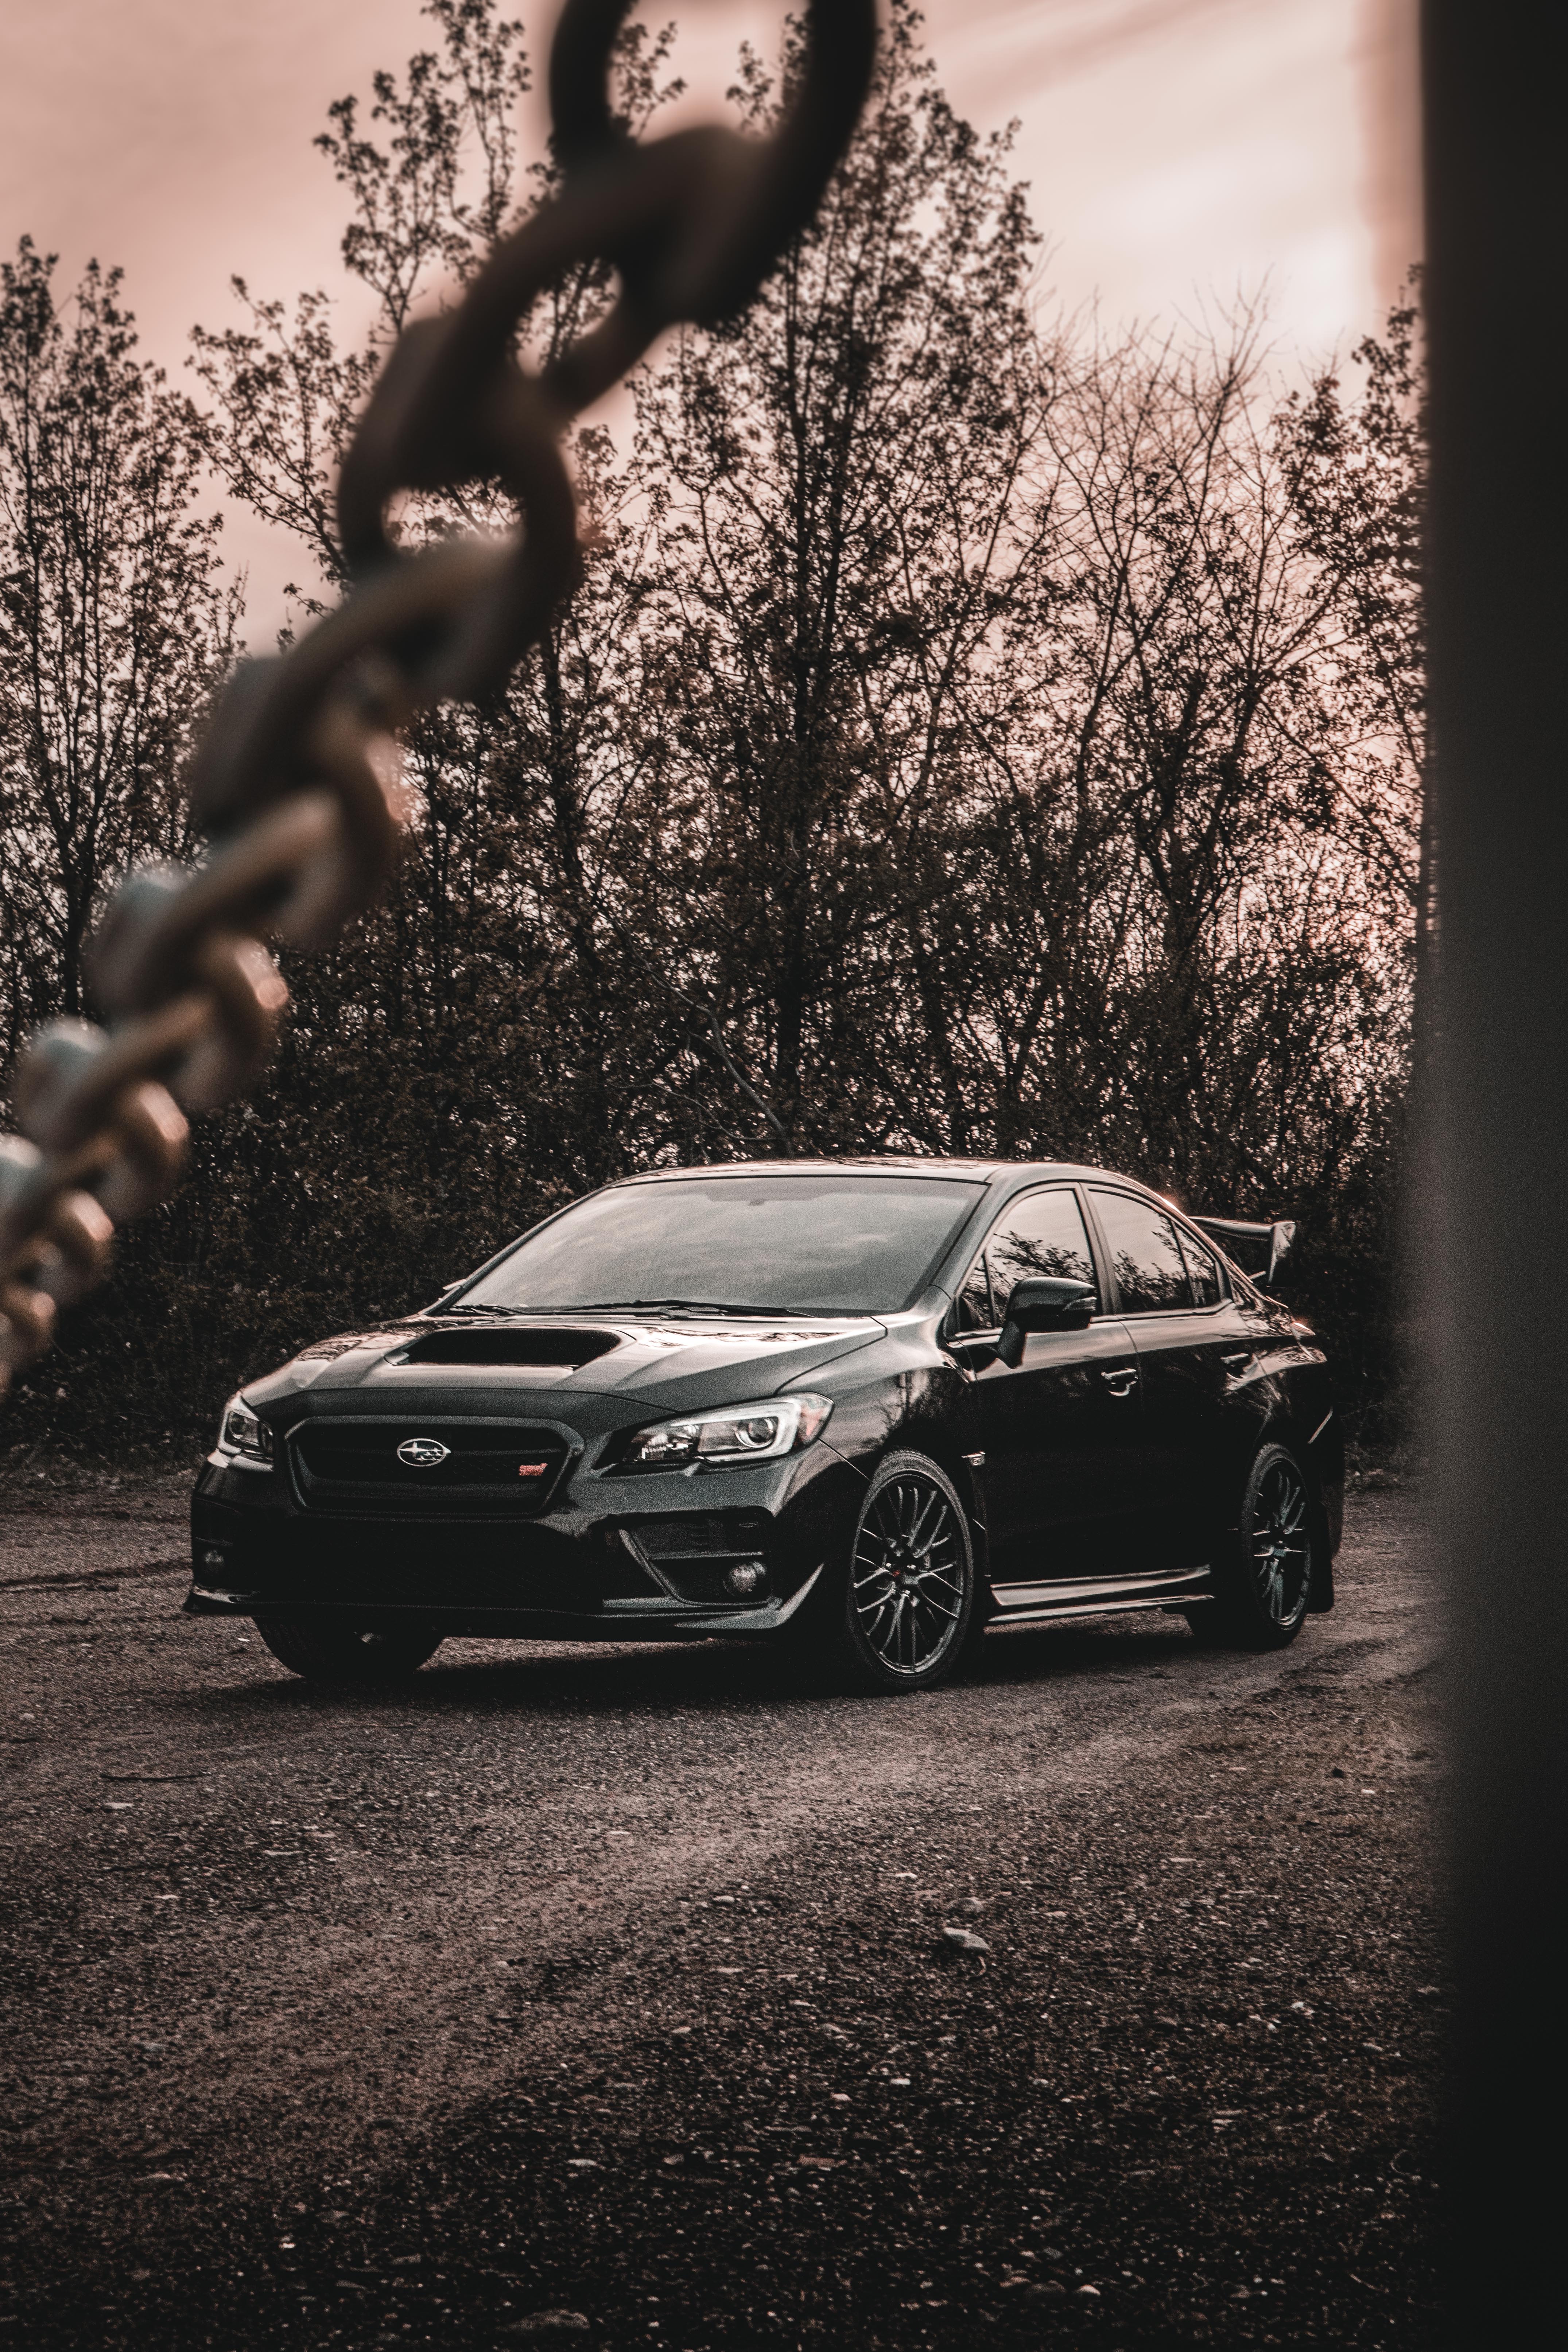 Subaru Sports Car Photoshoot After Editing